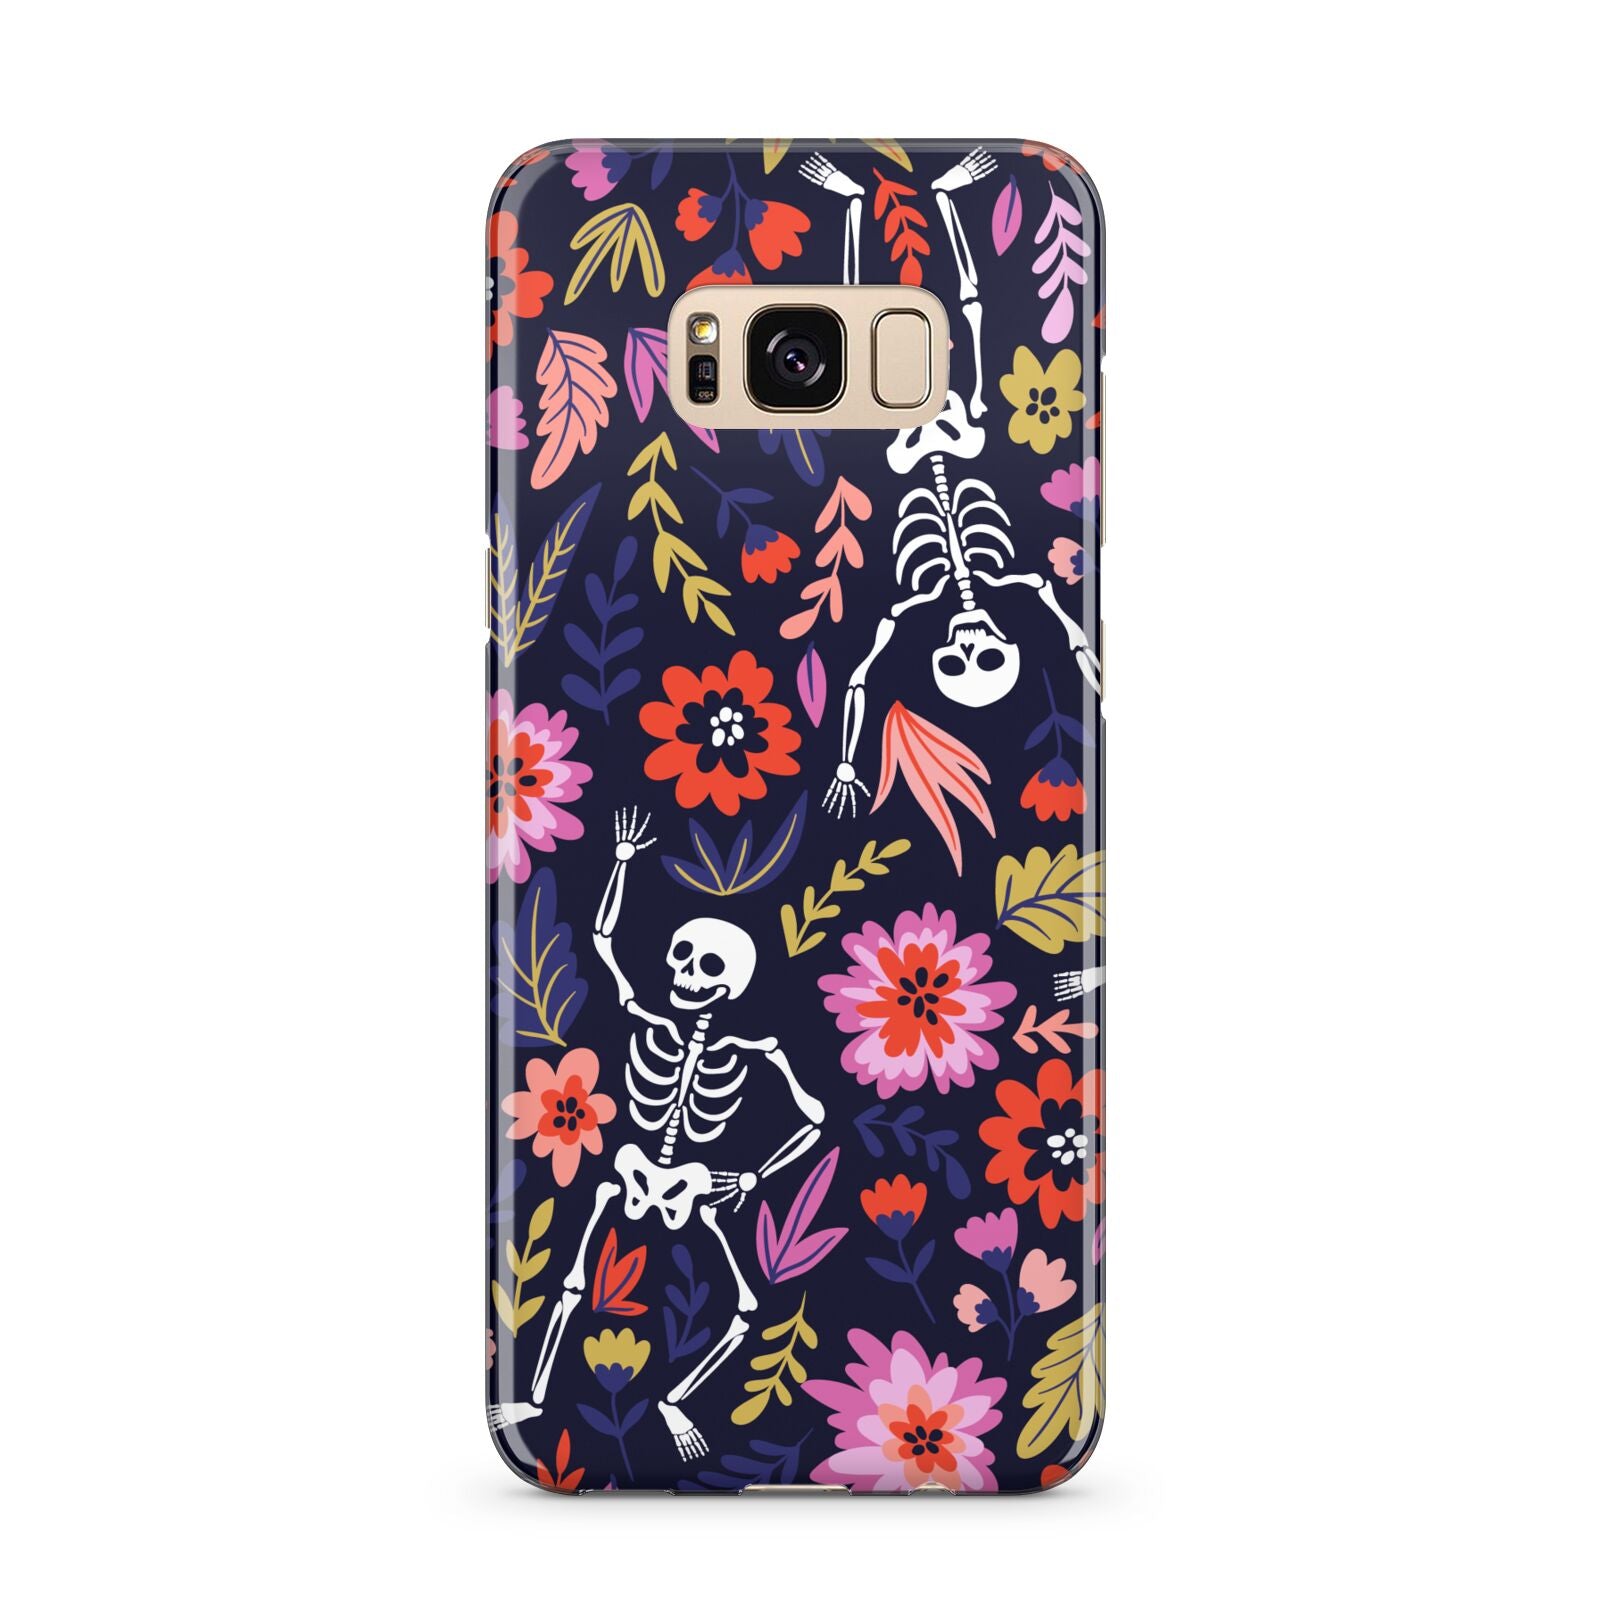 Floral Skeleton Samsung Galaxy S8 Plus Case